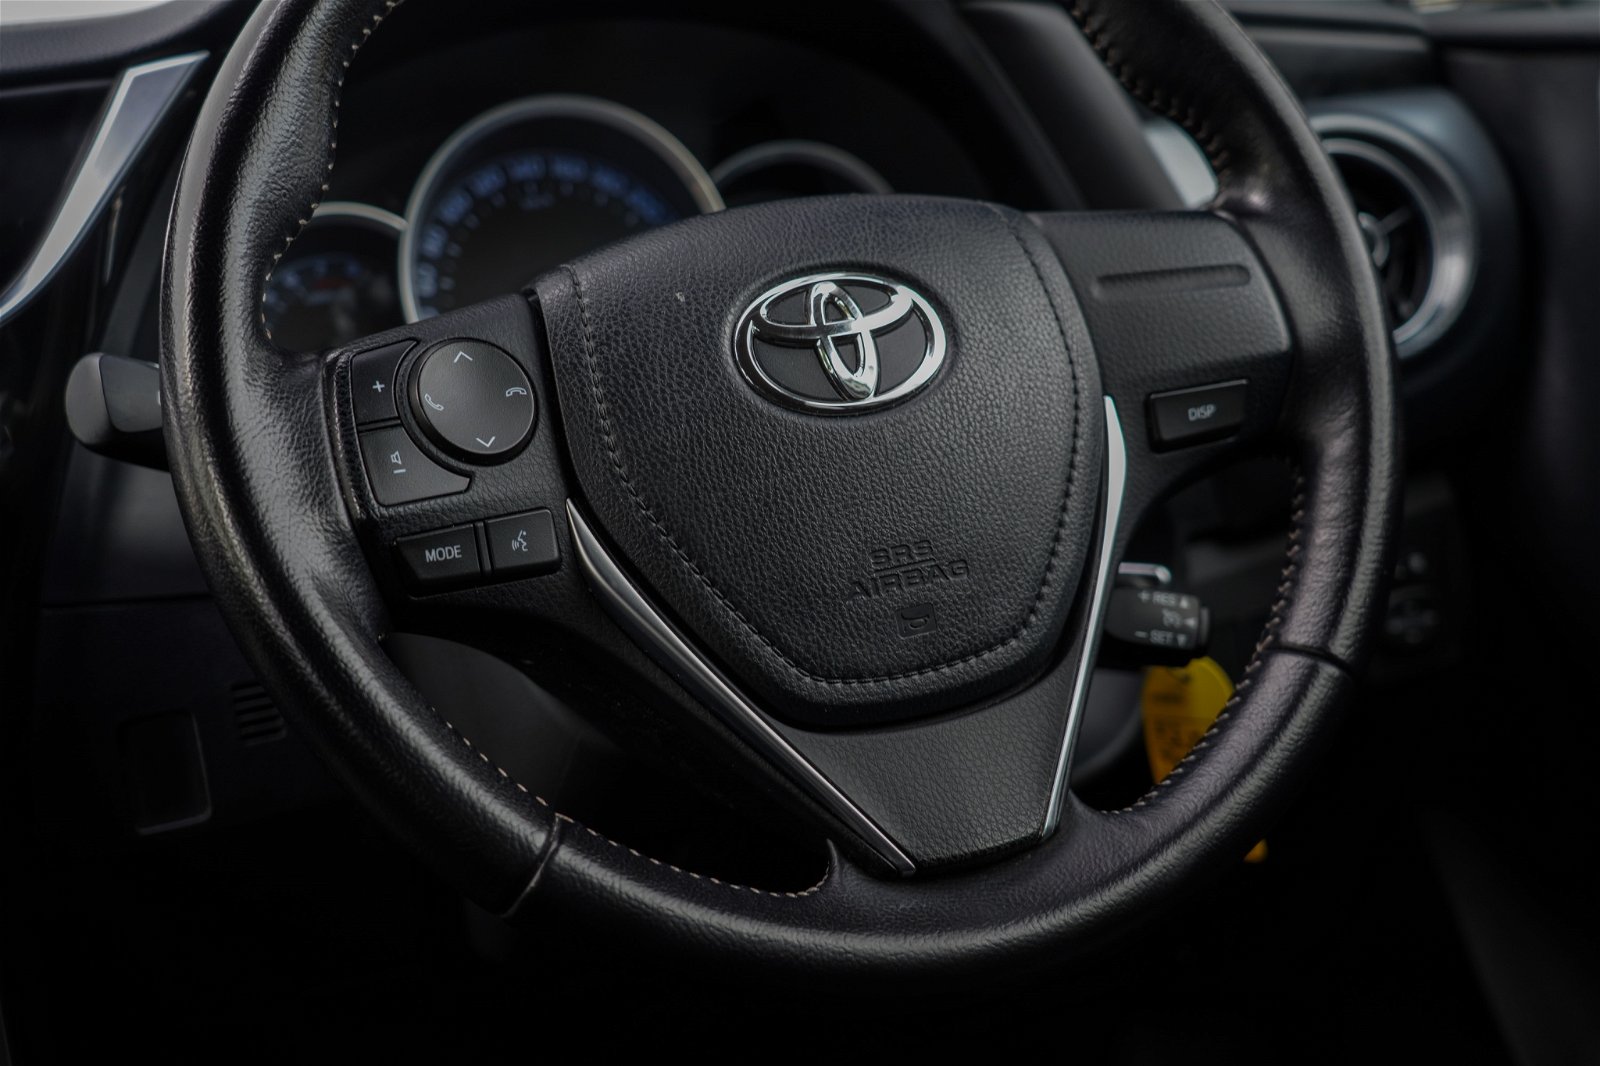 2015 Toyota Corolla GLX 1.8P CVT 4Dr Hatch